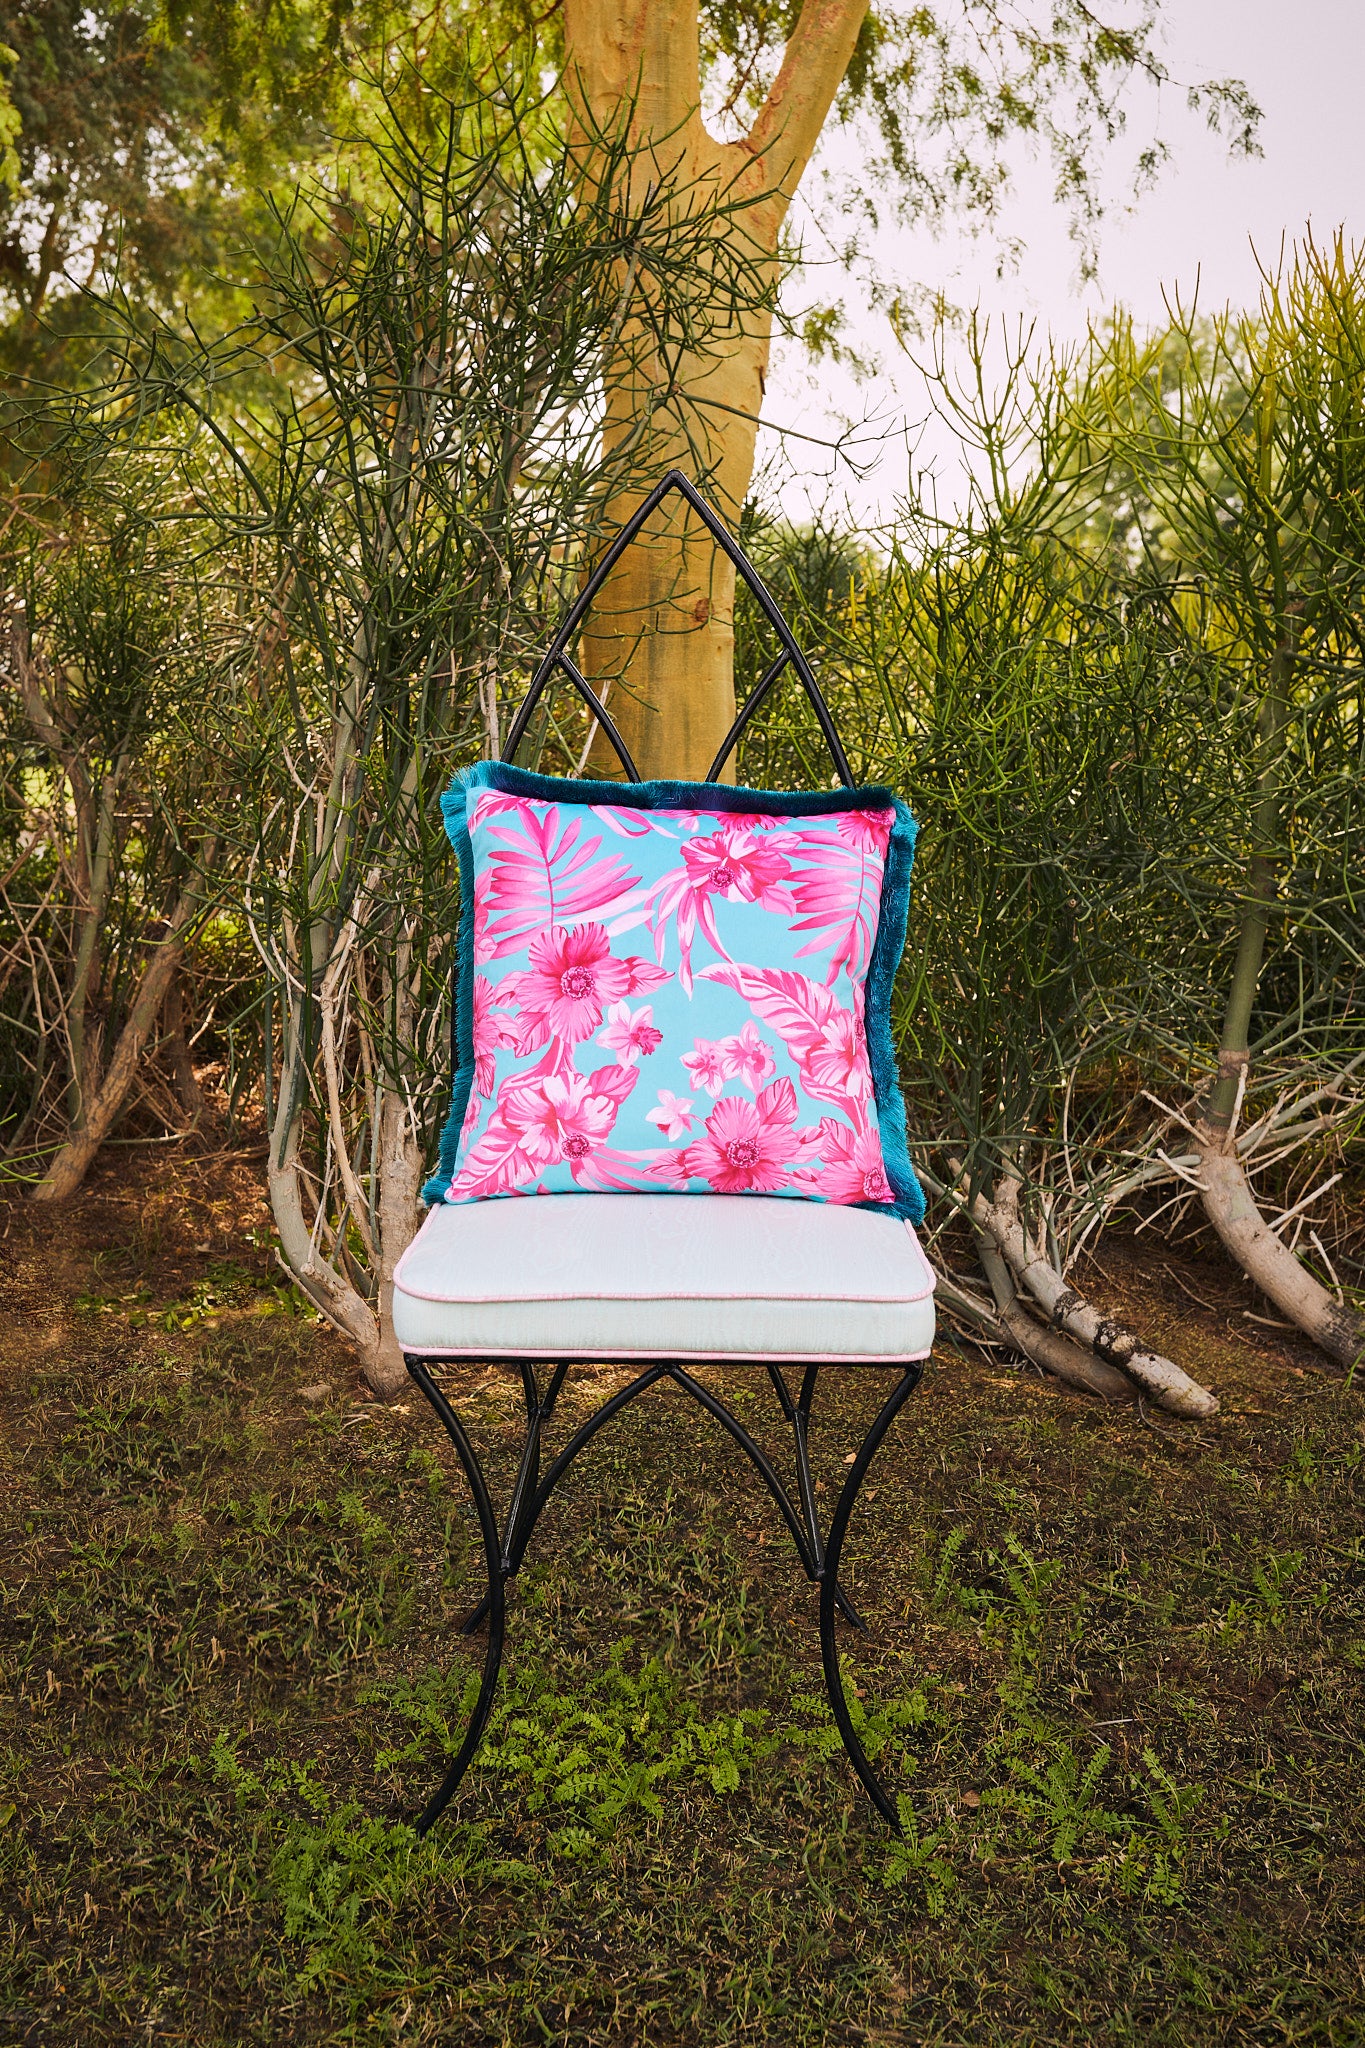 "Tropical Floral" Printed Velvet Gem Pillow